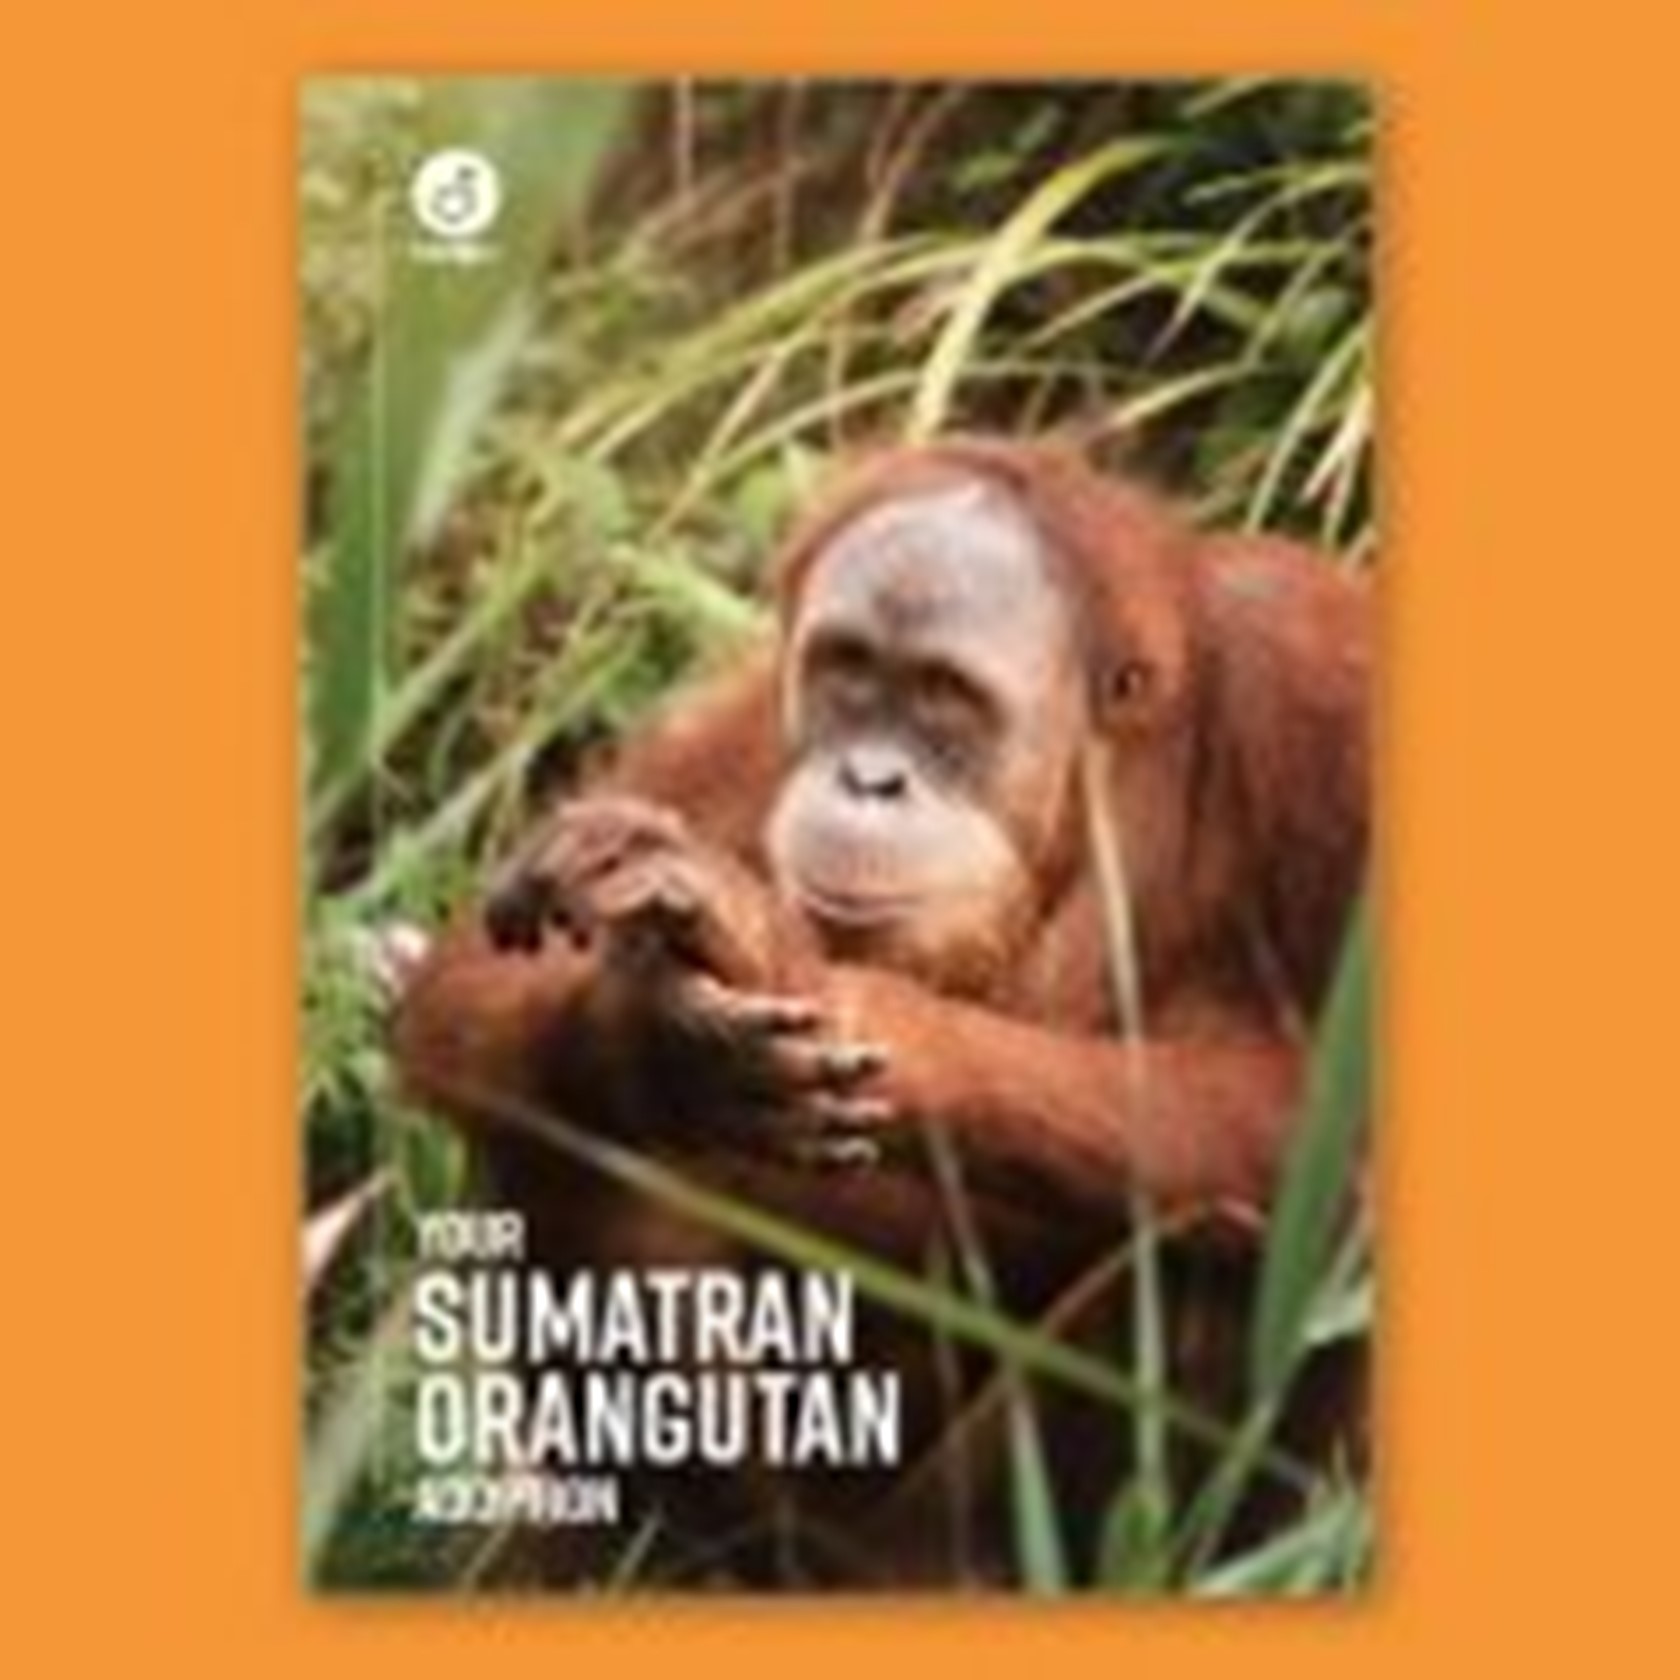 Digital Adoption - Orangutan